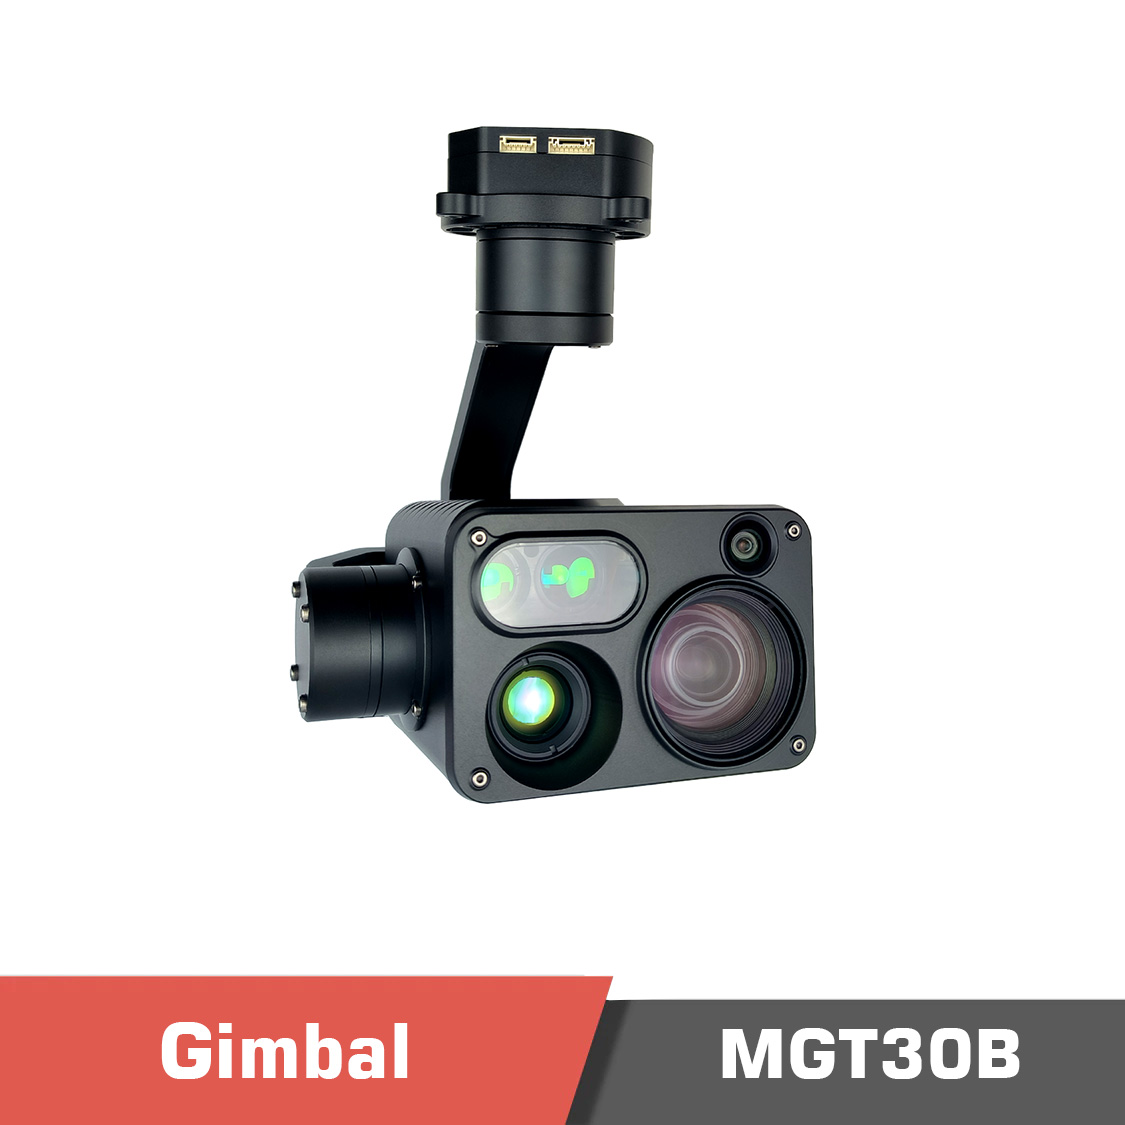 MGT30B temp1 - MGT30A Gimbal Camera,Ethernet,Laser range finder,30X Optical Zoom,Professional 3-axis High-precise FOC Program,HDMI,3-Axis Stabilizer,Lightweight Gimbal Camera,UAV UGV USV RC Planes,Small Gimbal Camera,S.Bus / UART / UDP Control Signal Input Ports,S.Bus Control Signal Output Port,AI Smart Identify Tracking,High-precise FOC Program - MotioNew - 1